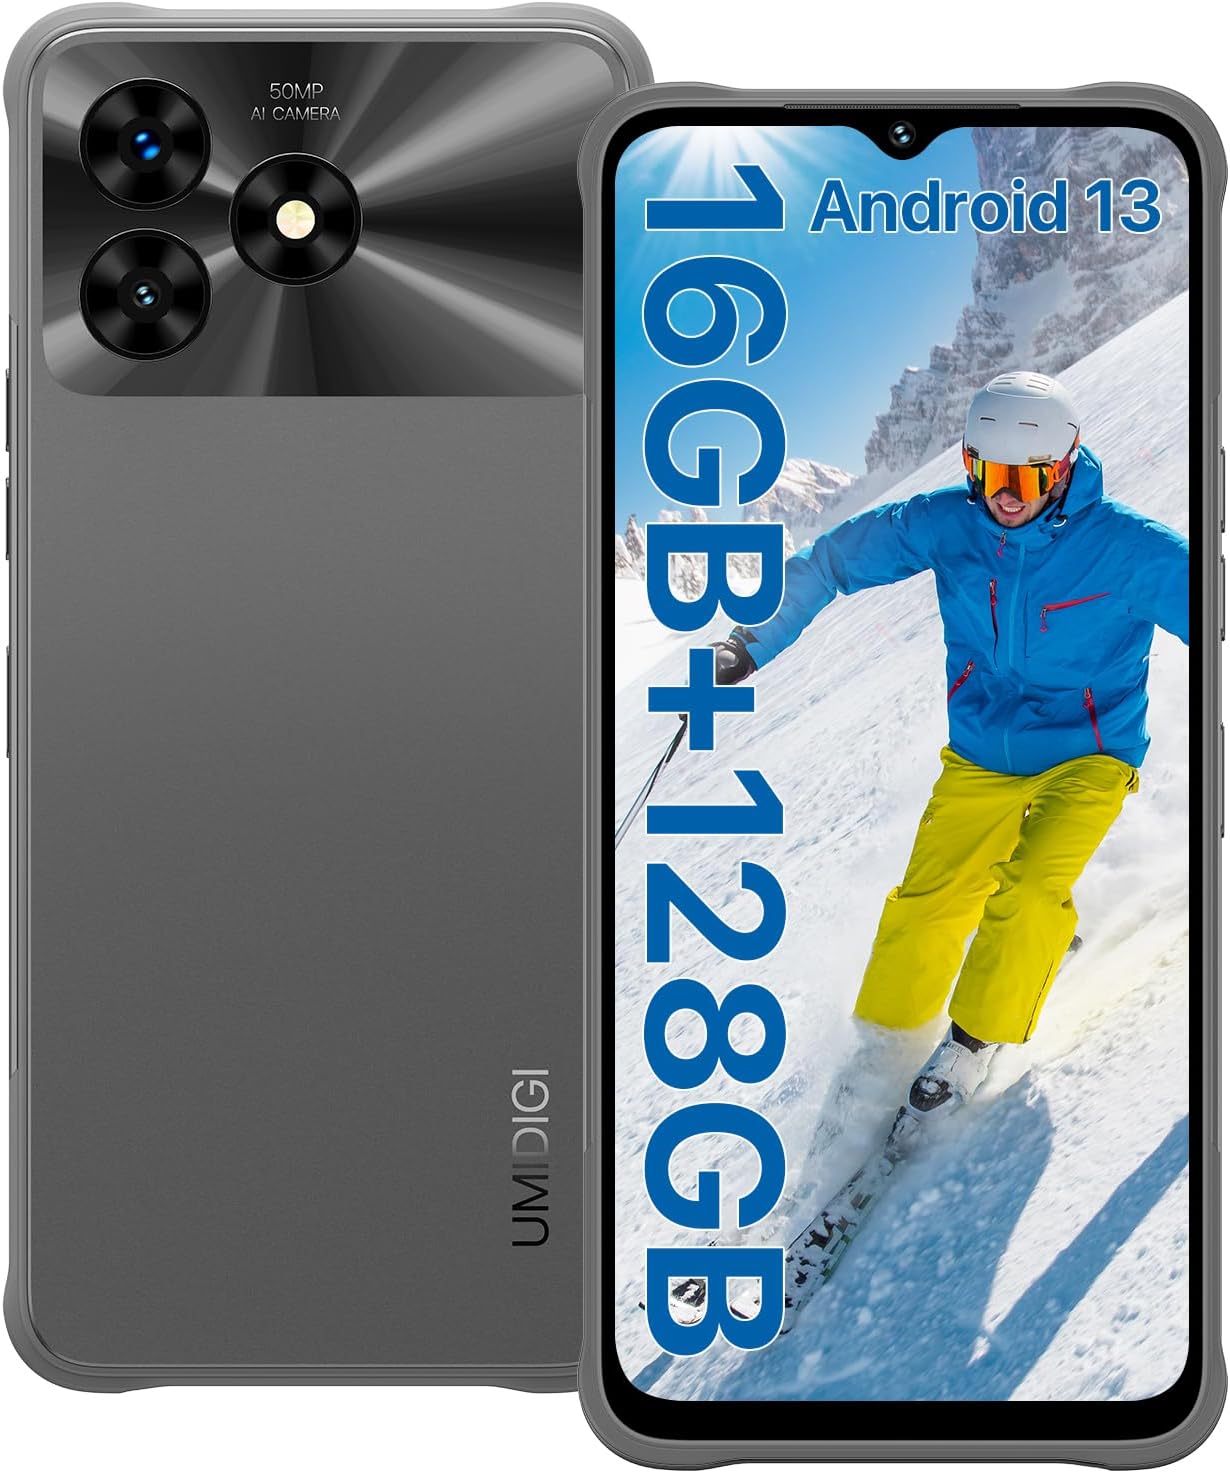 UMIDIGI G5 Mecha Rugged Smartphone Unlocked,Unisoc T606 8+8GB + 128GB 6.6" FHD Android 13 Cell Phone, IP68 Waterproof IP69K Rugged Phone, 50MP+2MP+8MP Camera, 6000mAh Battery Fast Charging,Gray